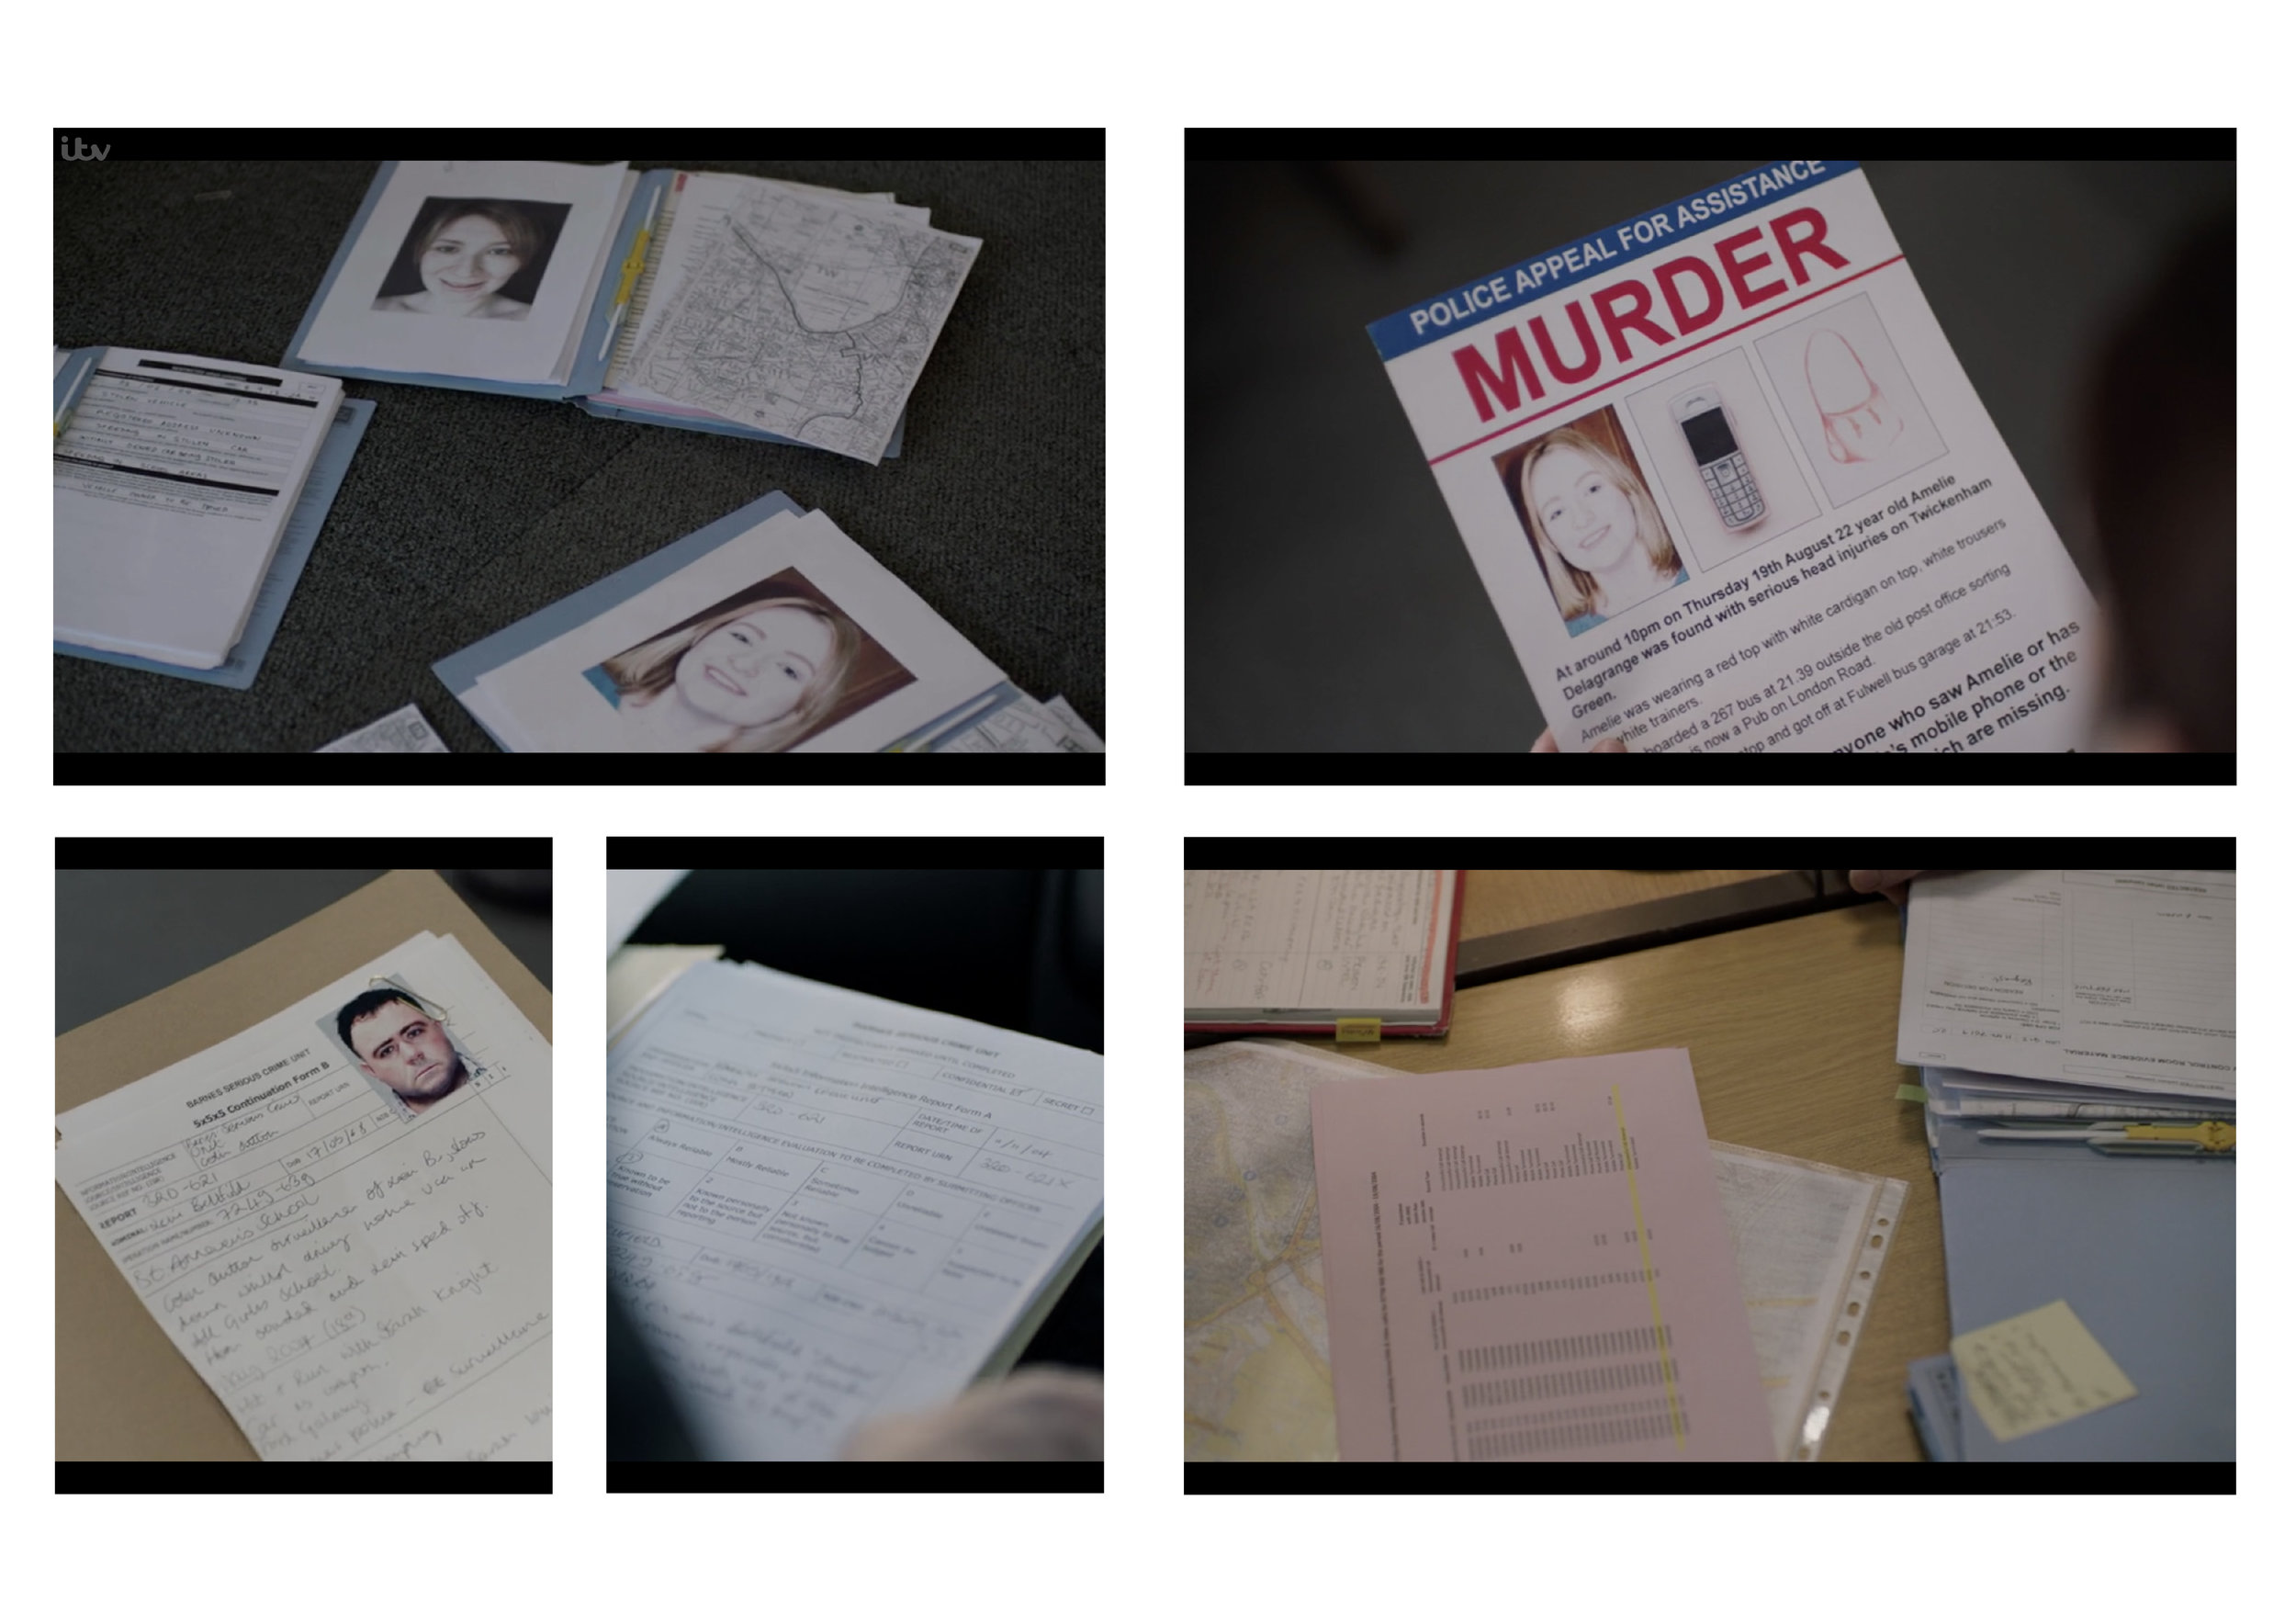 manhunt documents-02.jpg